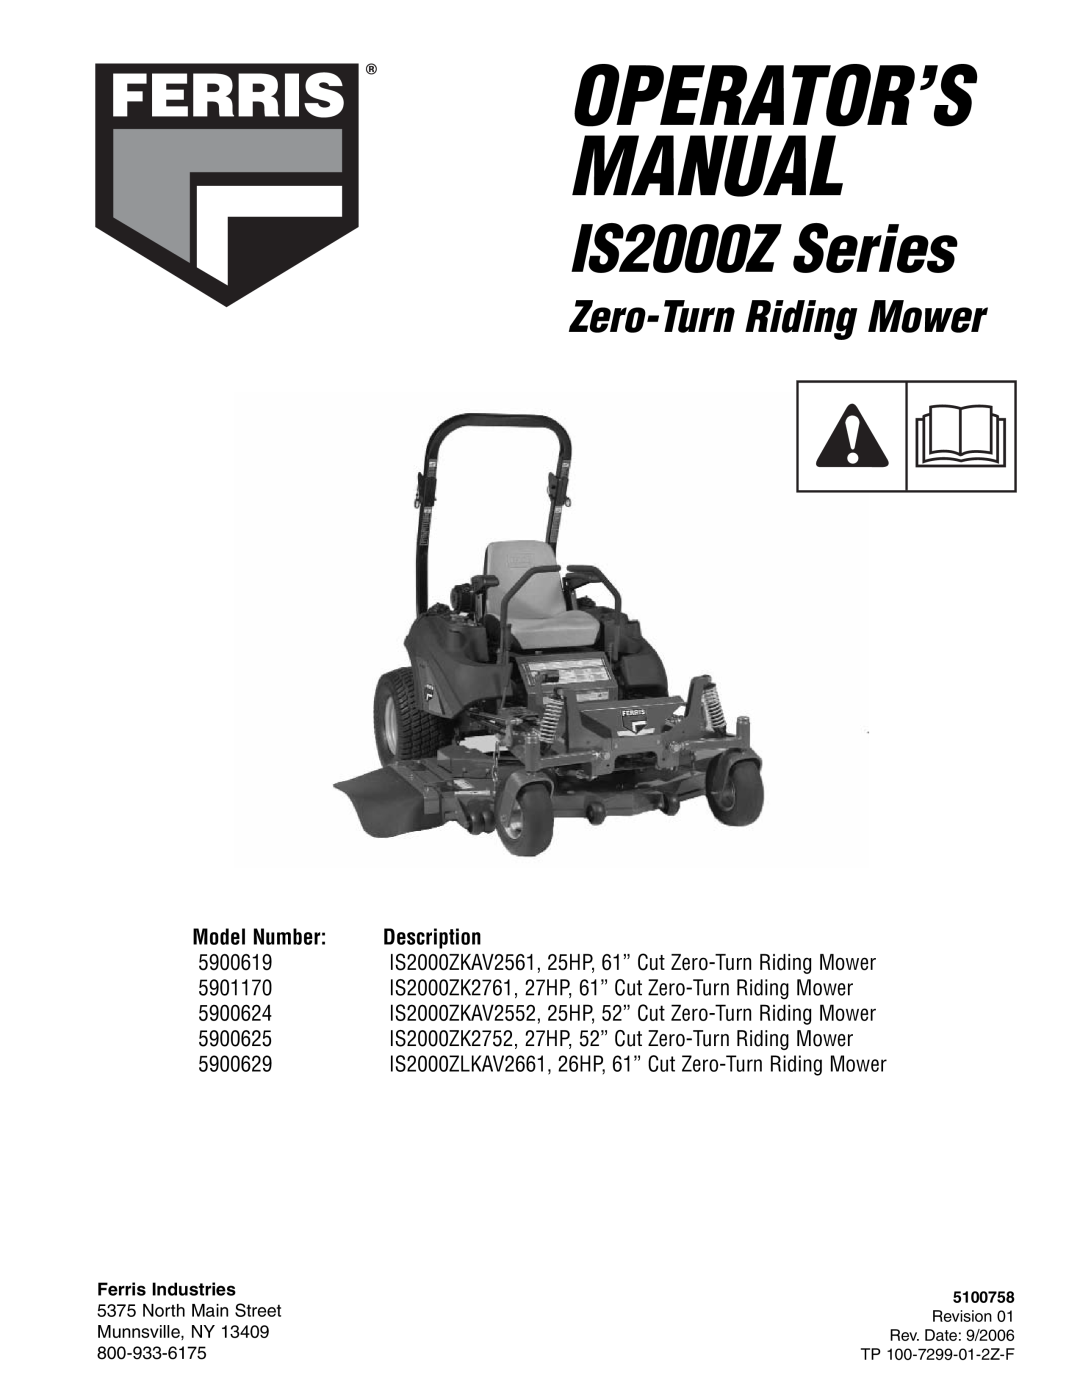 Ferris Industries 5900629, 5901170, 5900625 manual IS2000Z Series, Zero-Turn Riding Mower, Manual, Operator’S, Description 